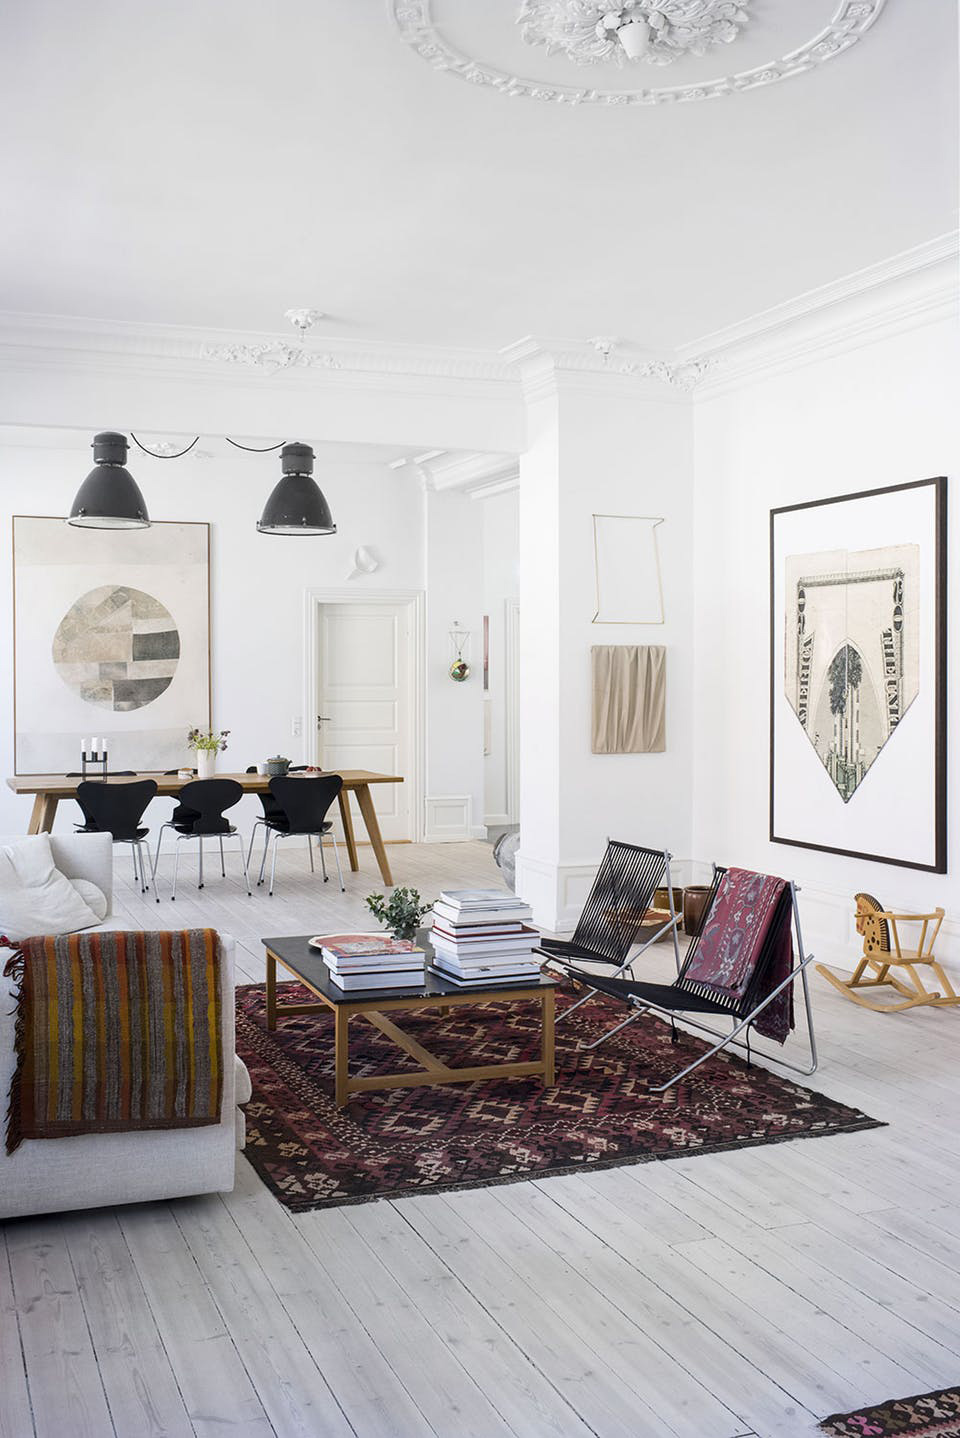 Take A Peek Inside The Beautiful And Eclectic Copenhagen Home Of An Art